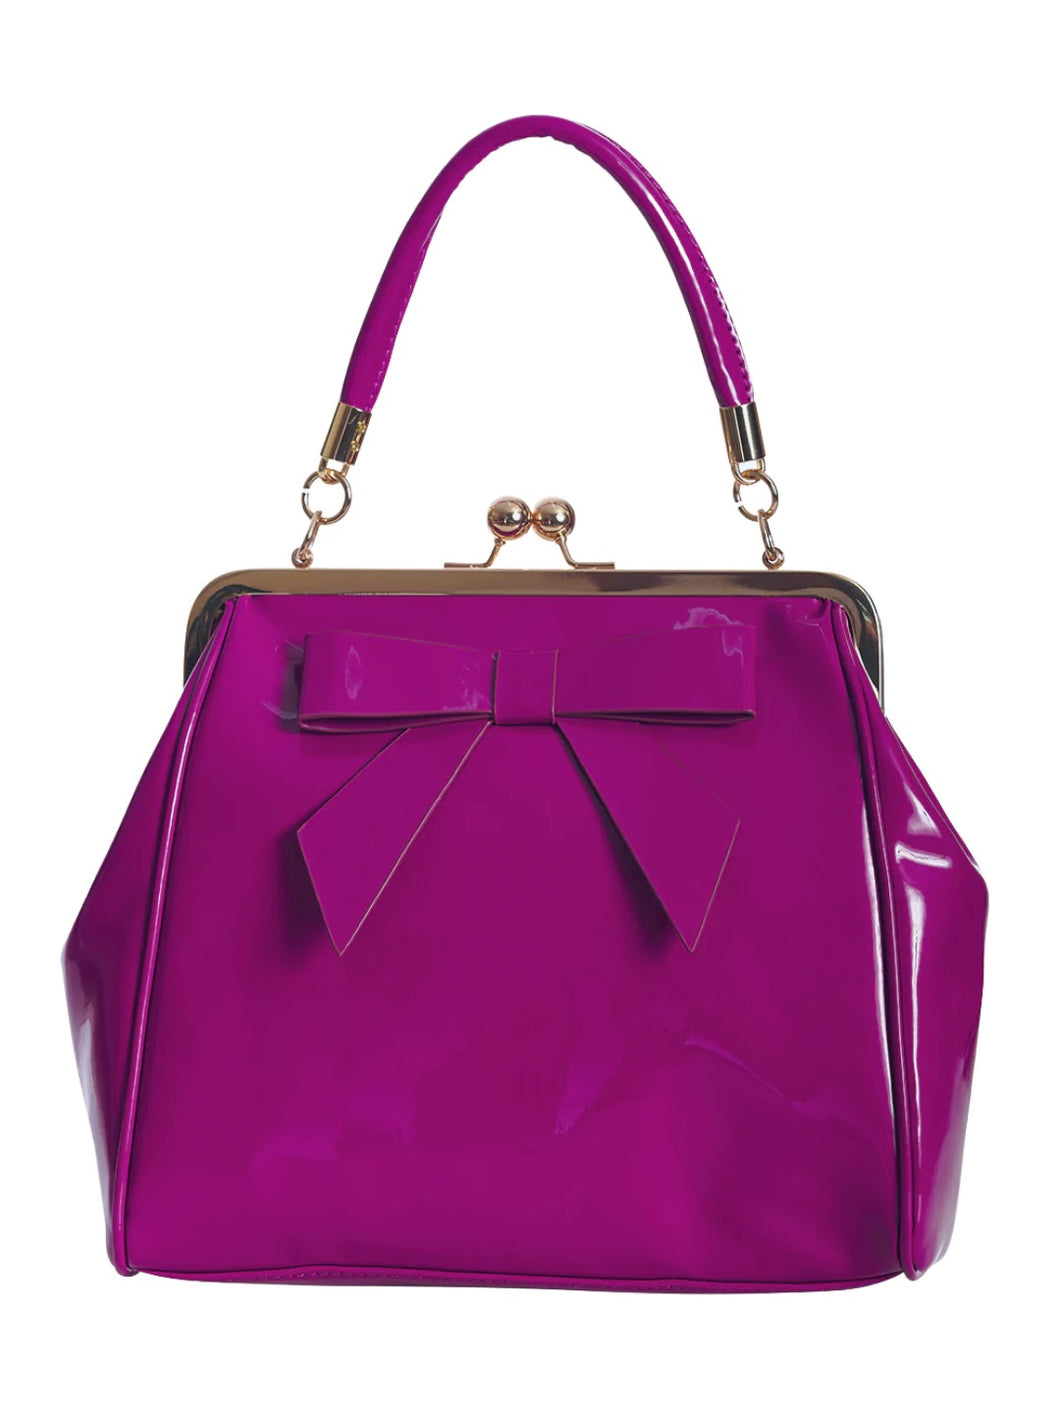 Fuchsia Pink Classic Retro Bow Kisslock Handbag